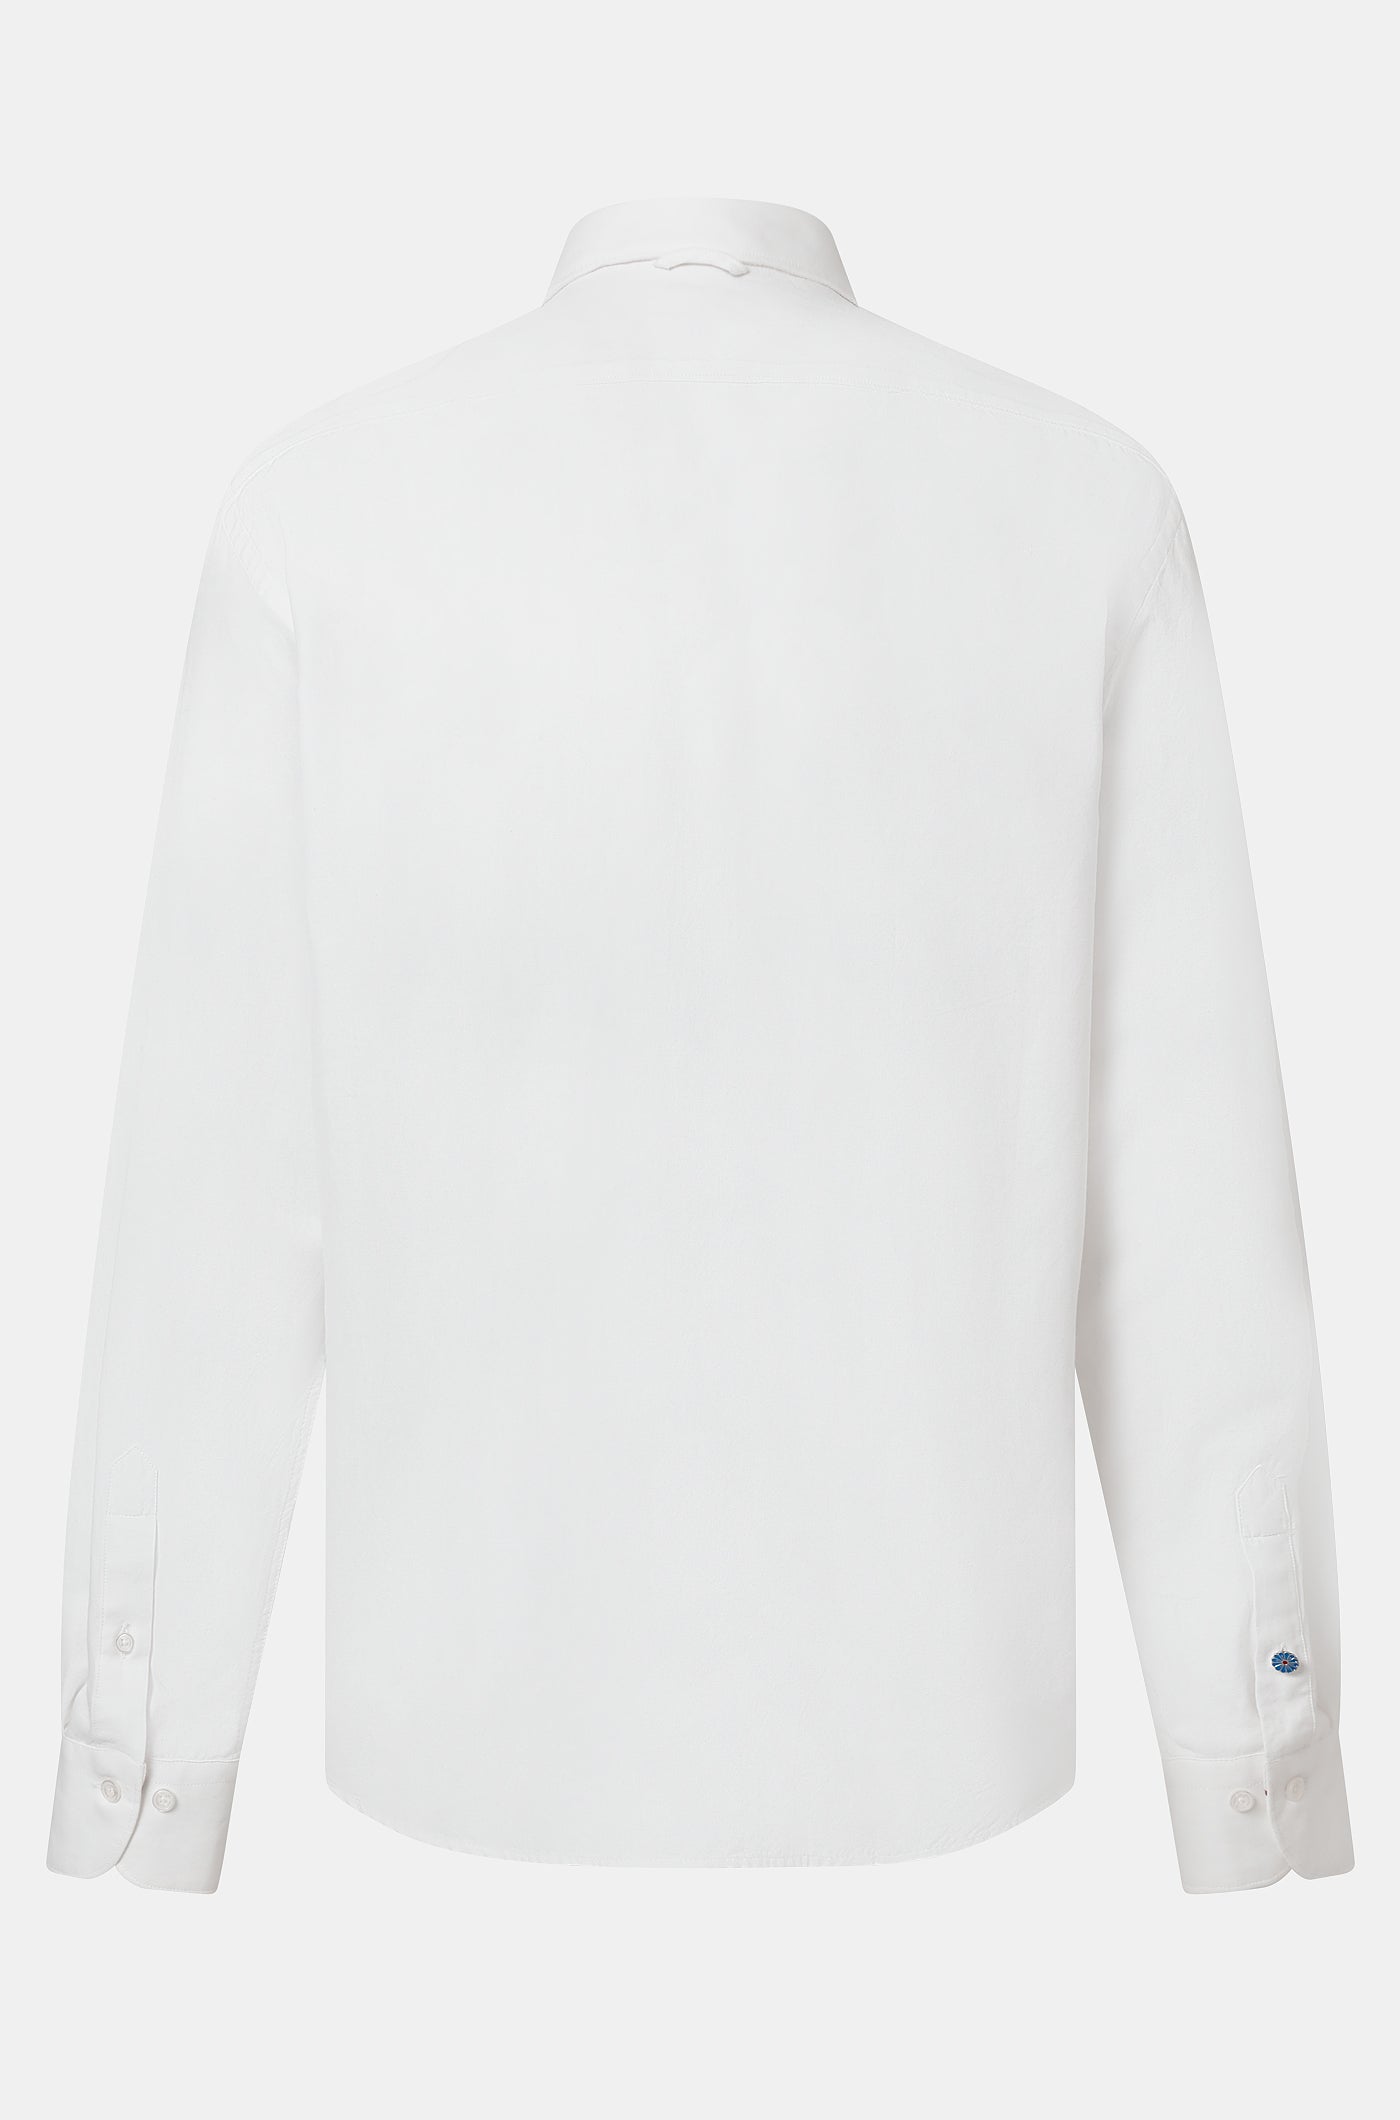 The Club White Shirt